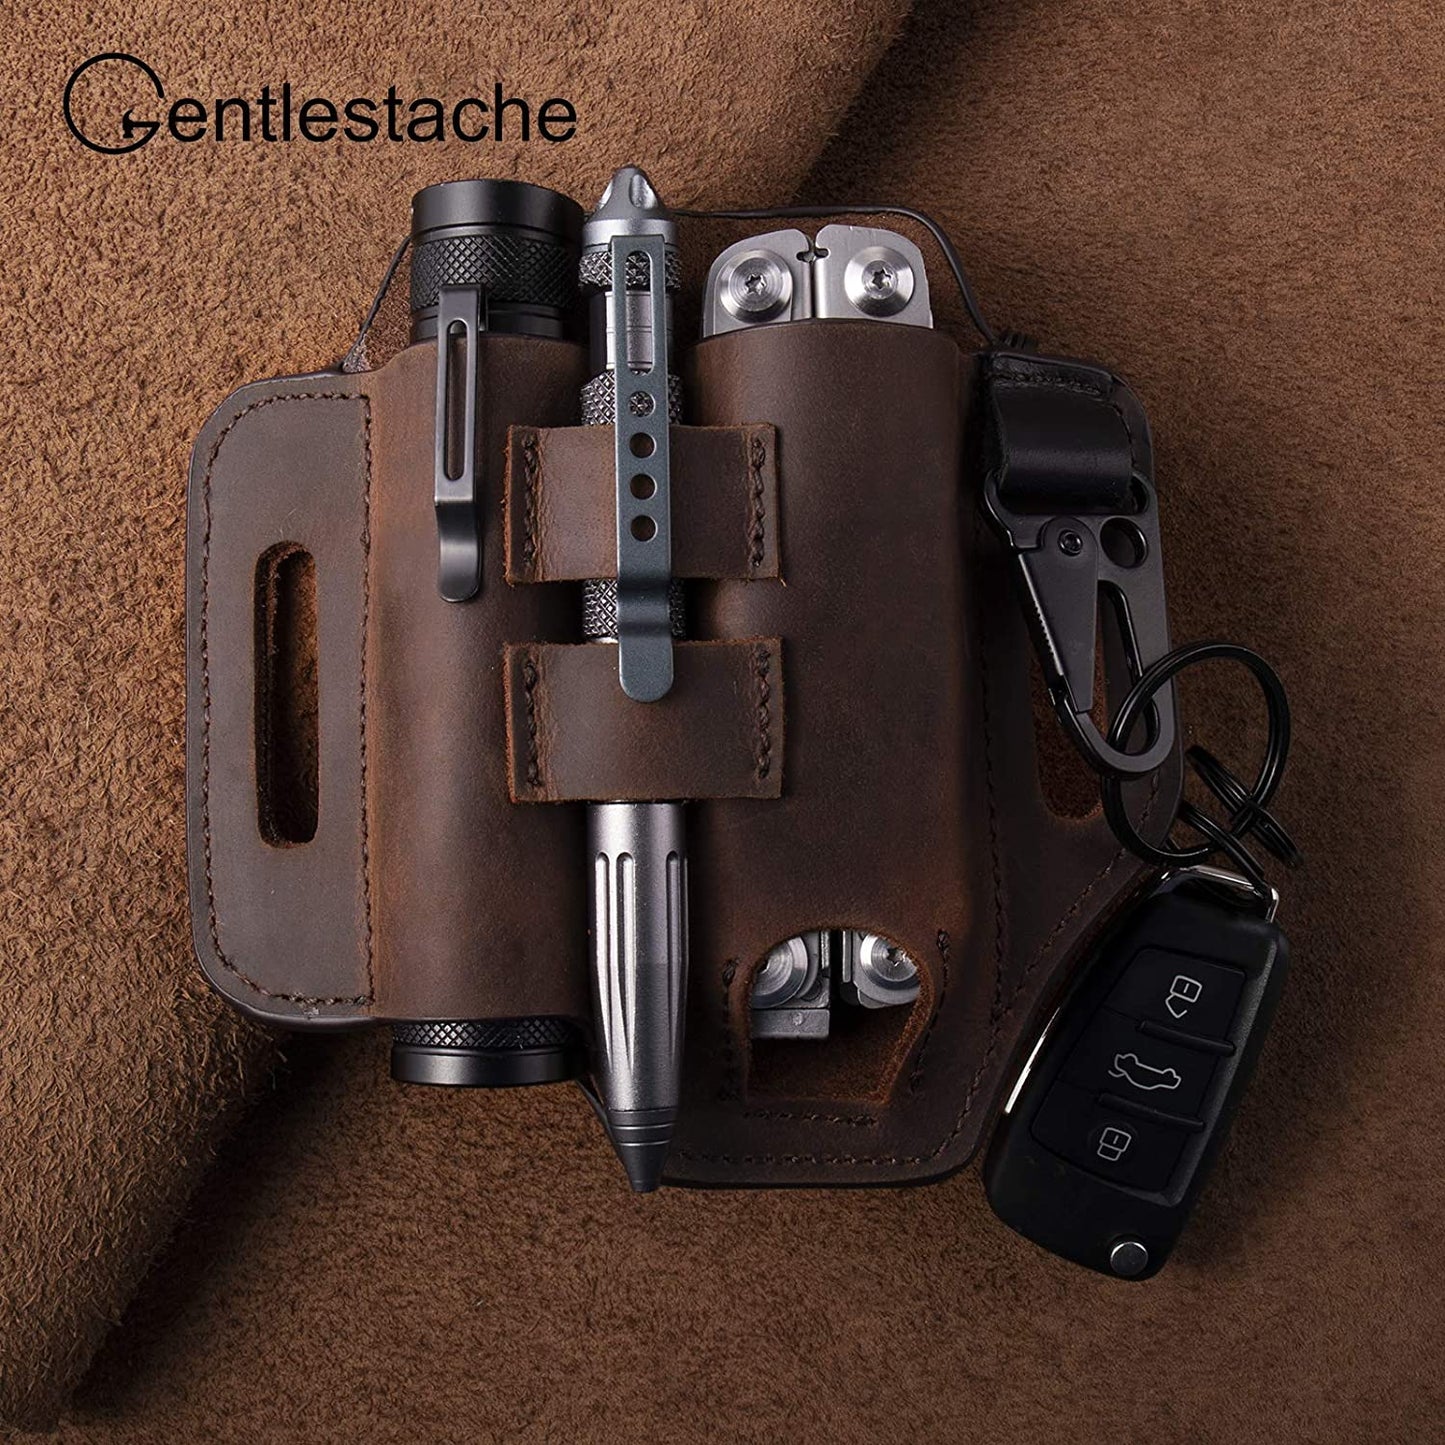 Leather Sheath for Leatherman Multitool Sheath EDC Pocket Organizer with Key Holder for Belt and Flashlight Sheath Multitool Pouch